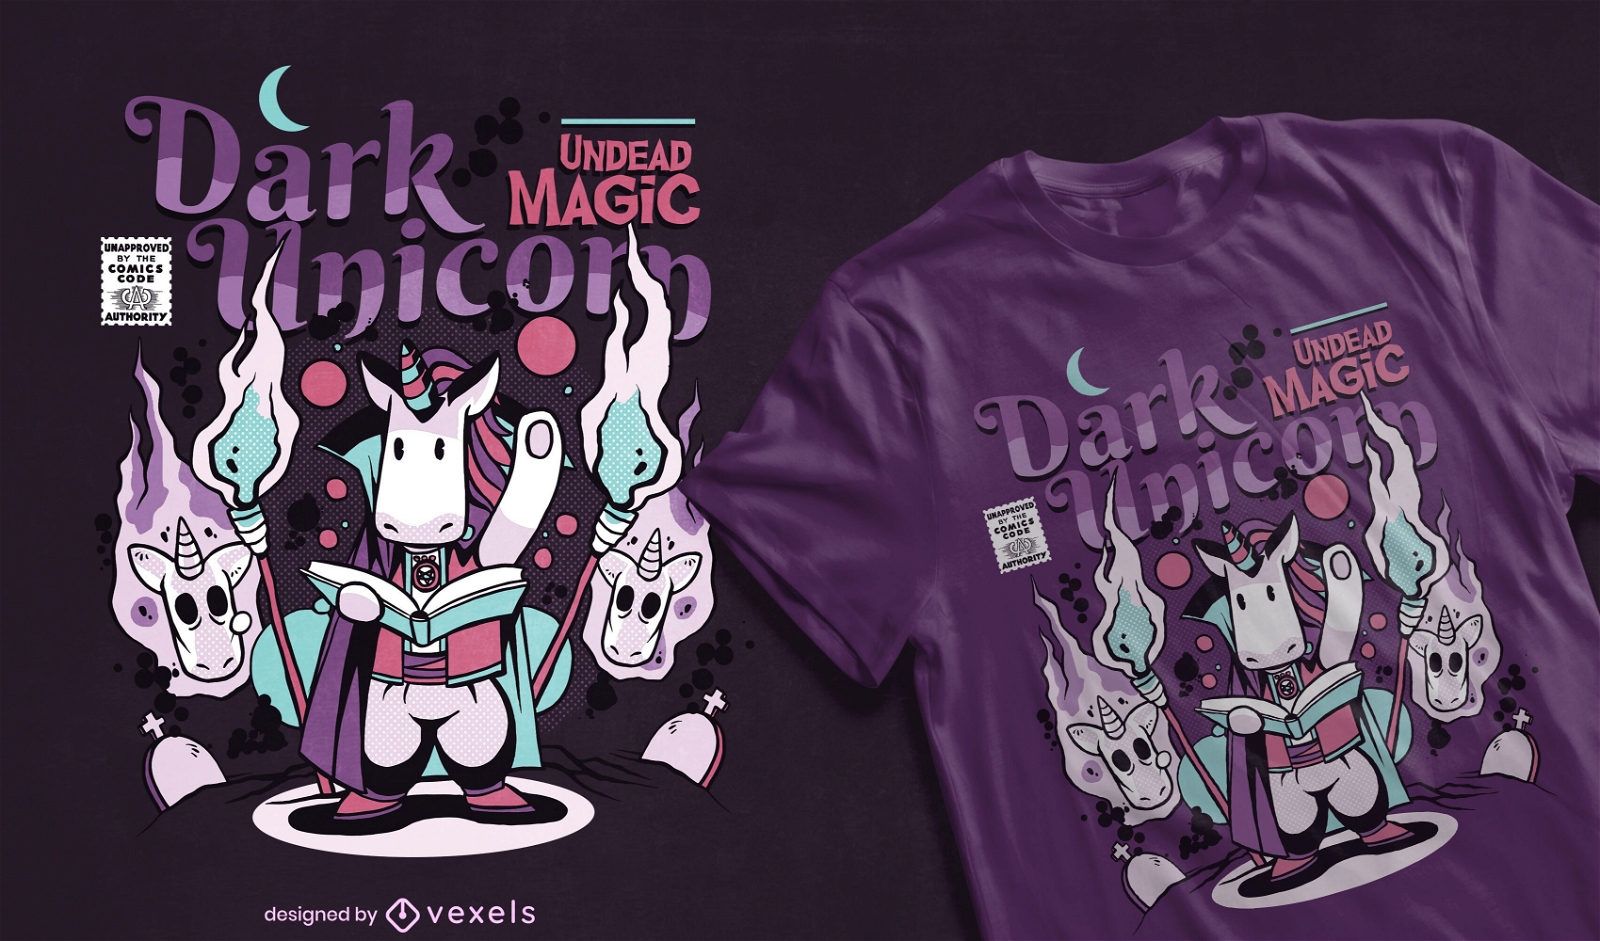 Dark unicorn comic t-shirt design